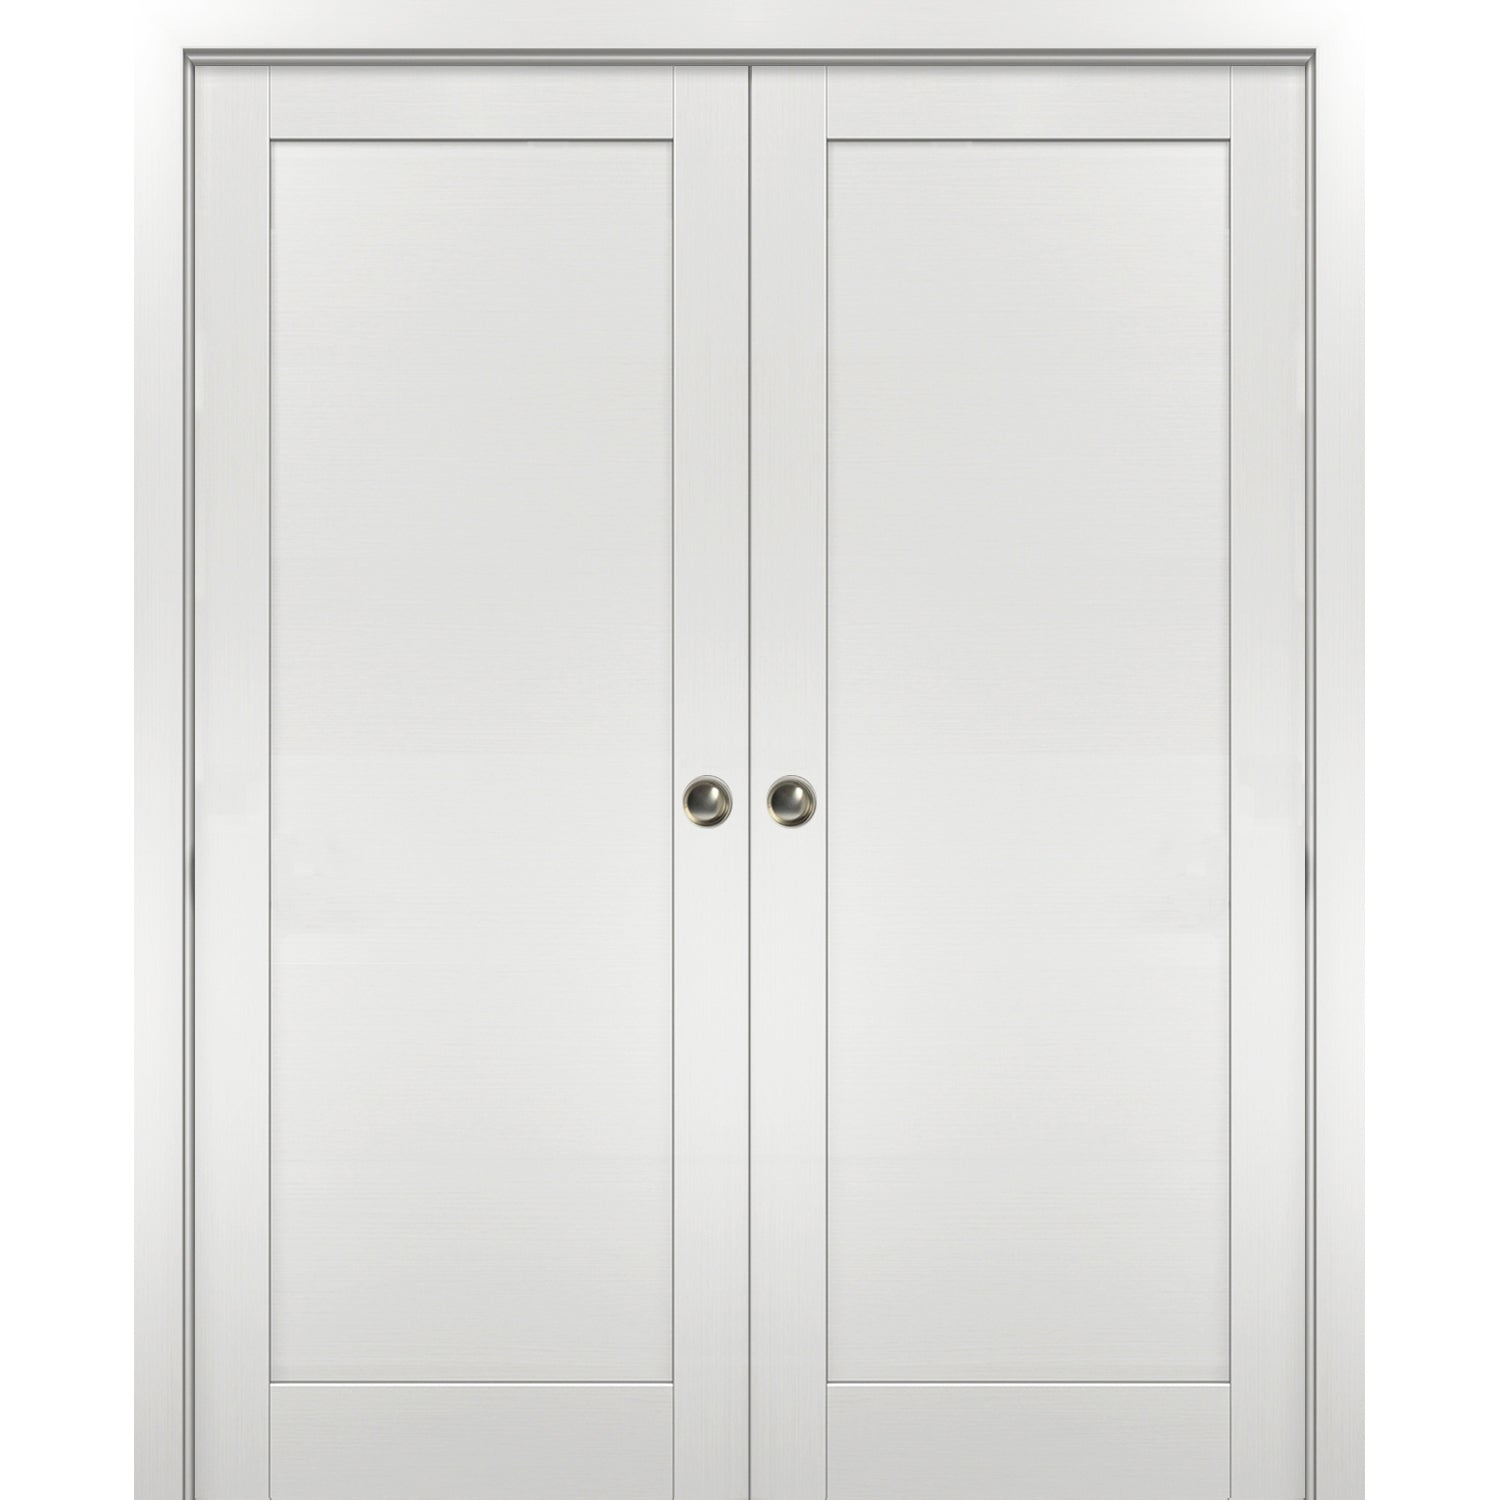 SARTODOORS Double Pocket Doors 84 x 96 with Frames | Quadro 4111 White Ash | Rail Hardware | MDF Sliding Closet